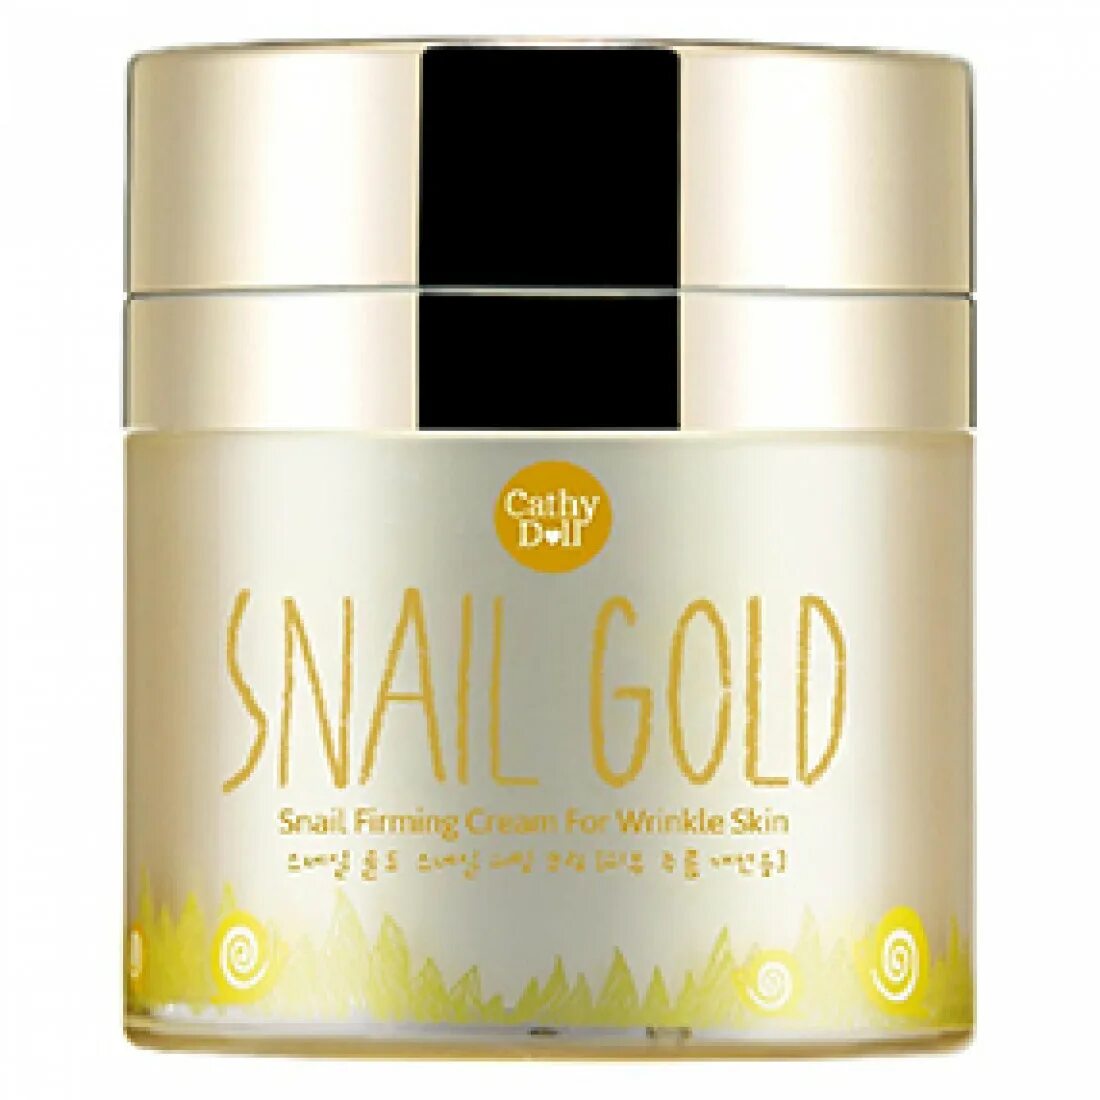 Крем с улиткой snail gold. Крем Cathy Doll Snail Gold. Cathy Doll Snail Gold Snail Firming Cream for Wrinkle Skin. Snail Gold крем Тайланд Cathy Doll. Крем для лица с золотом Cathy Doll.